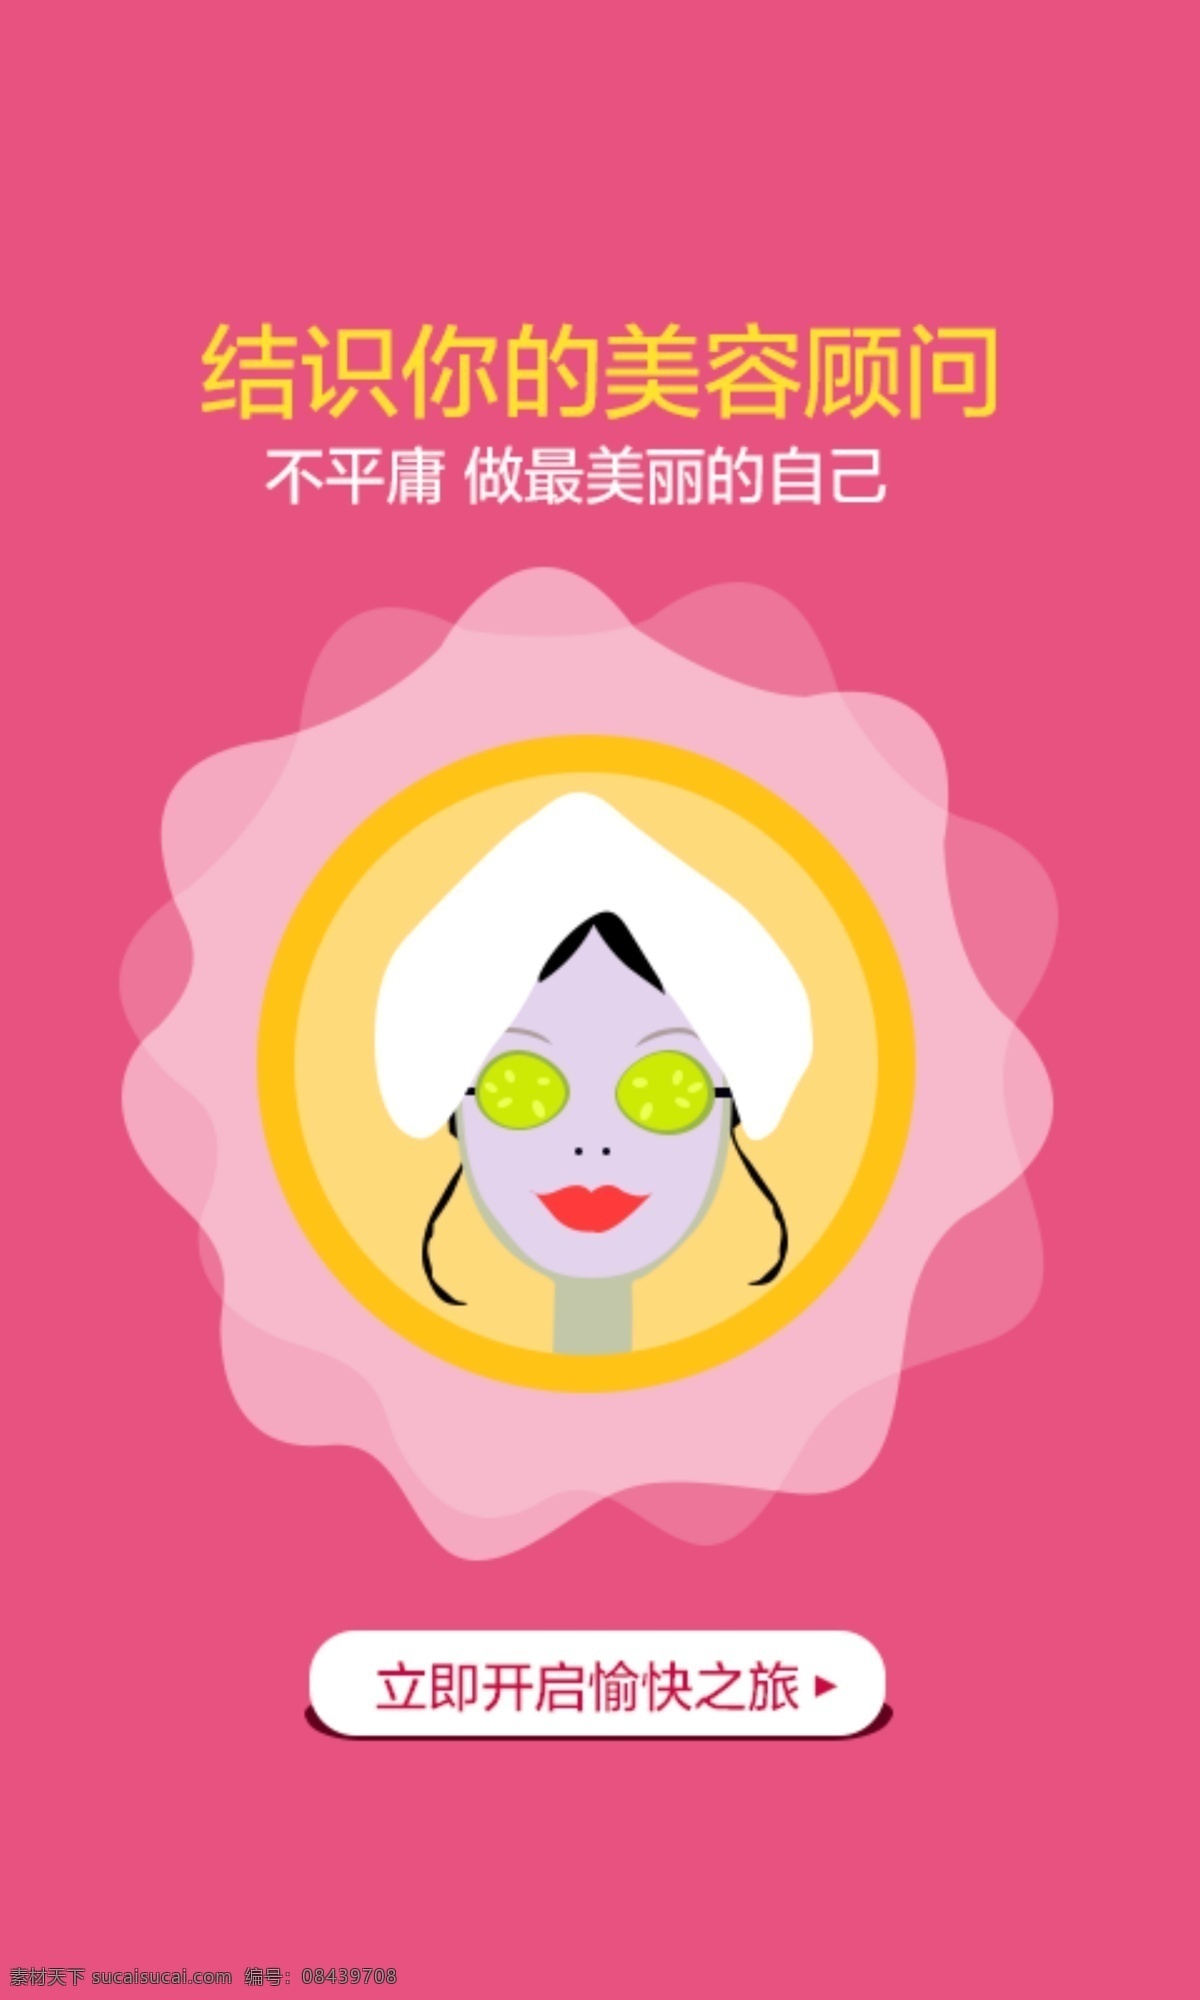 app 欢迎 界面 页面 ap 创意 广告 海报 电子商务 欢迎页面 手机界面 网页 移动界面设计 美女美容 粉色